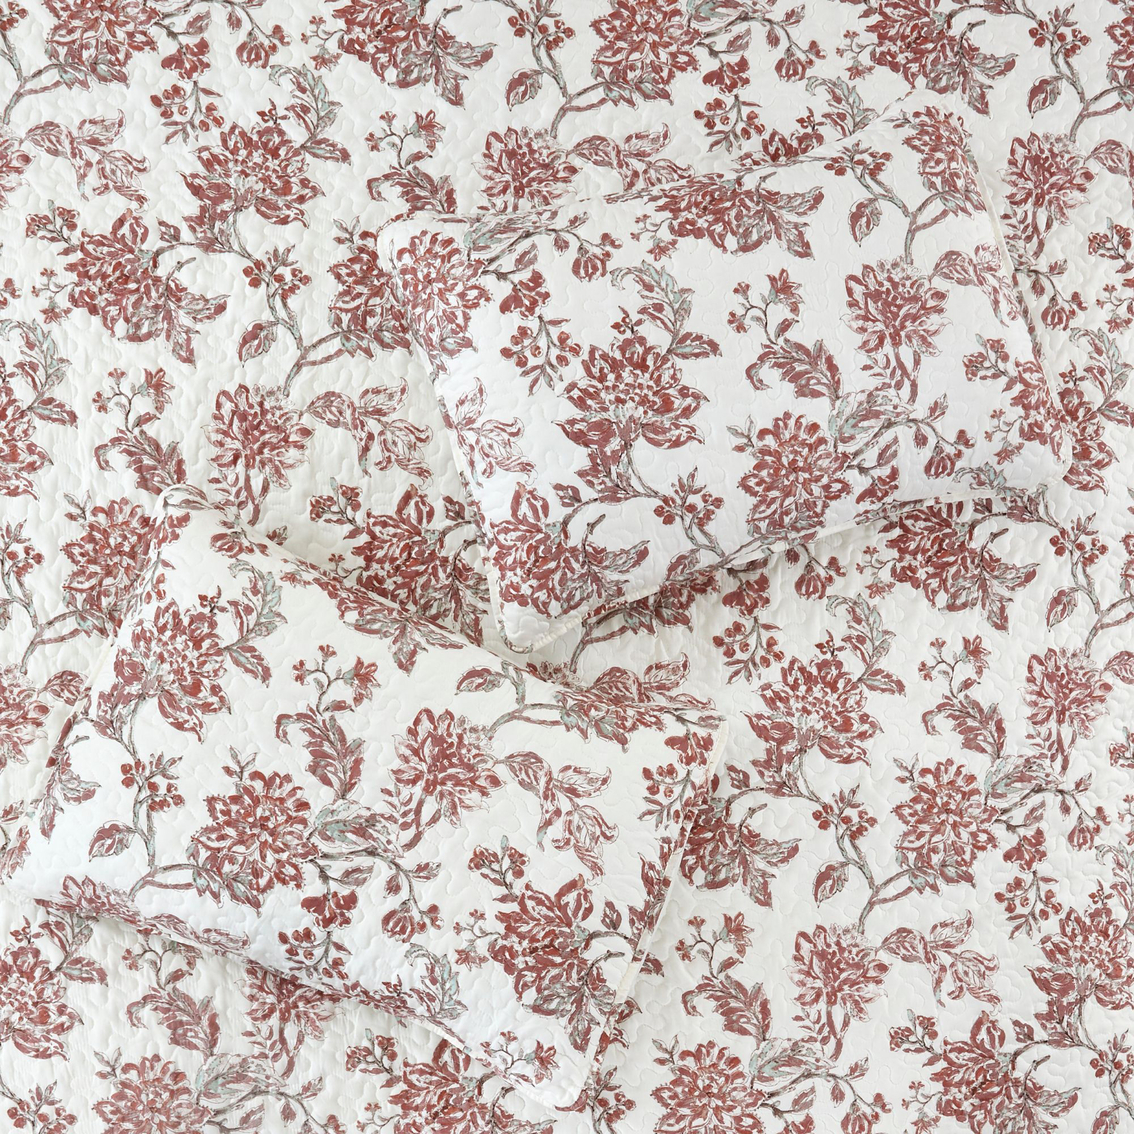 Modern Threads 5 pc. Print Primrose Floral Quilt Set - Image 6 of 6